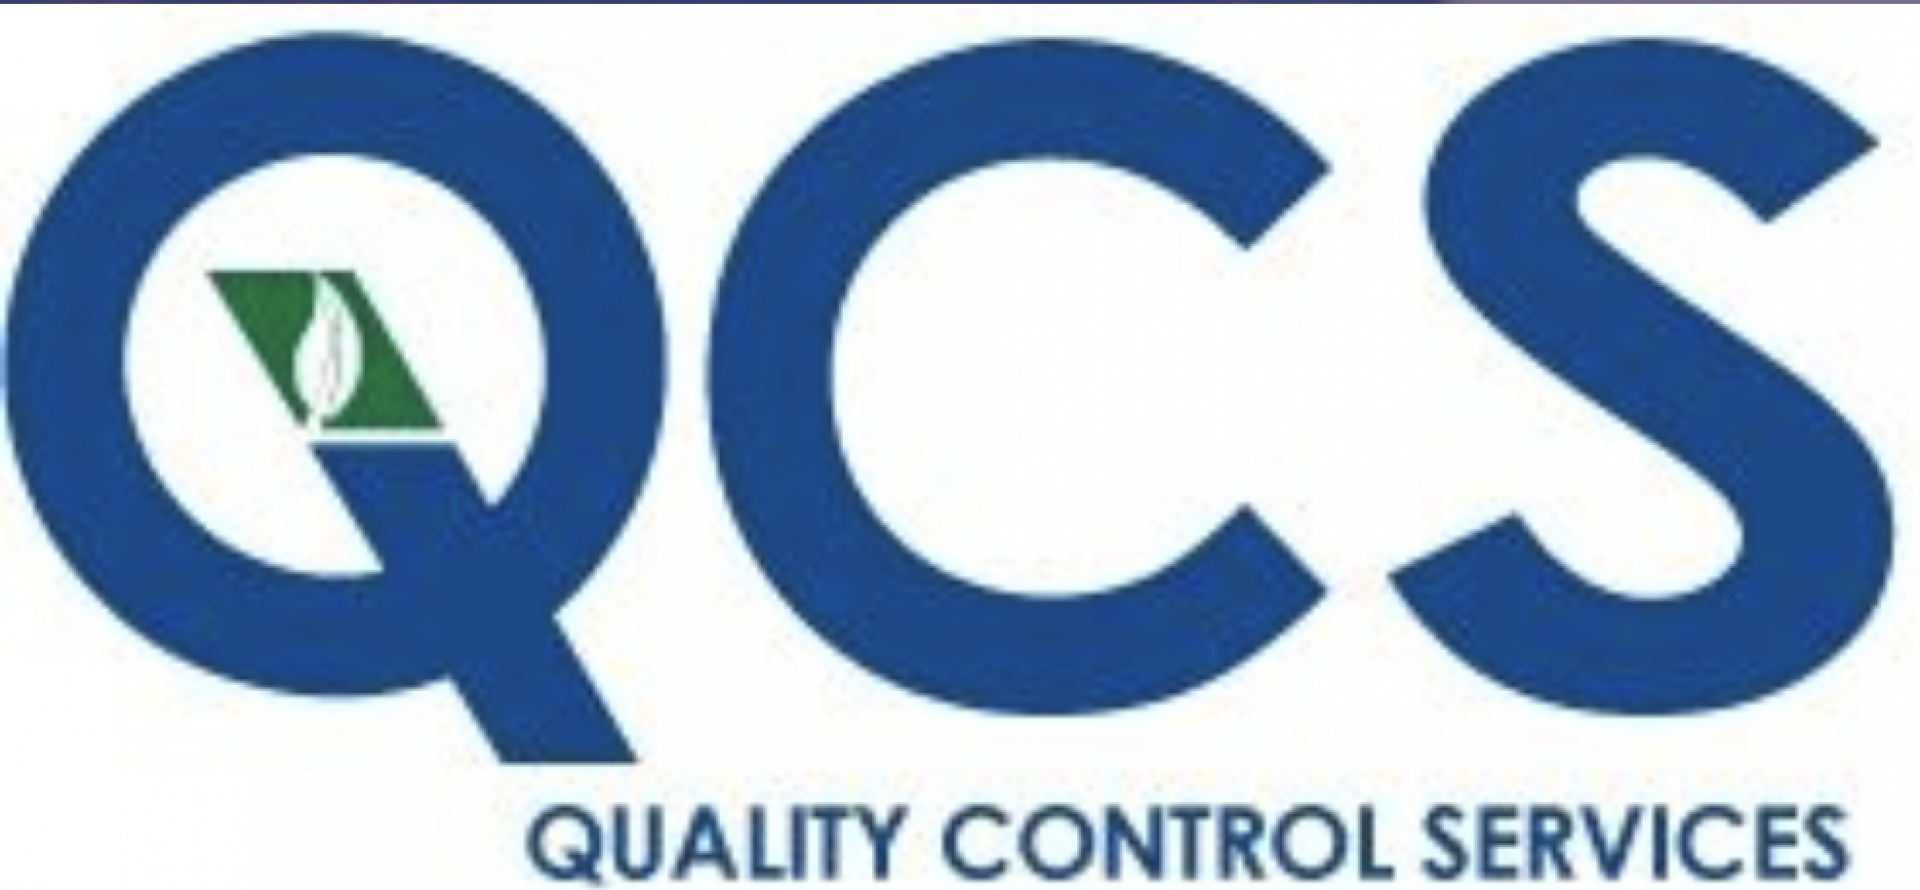 Quality Control Services company logo